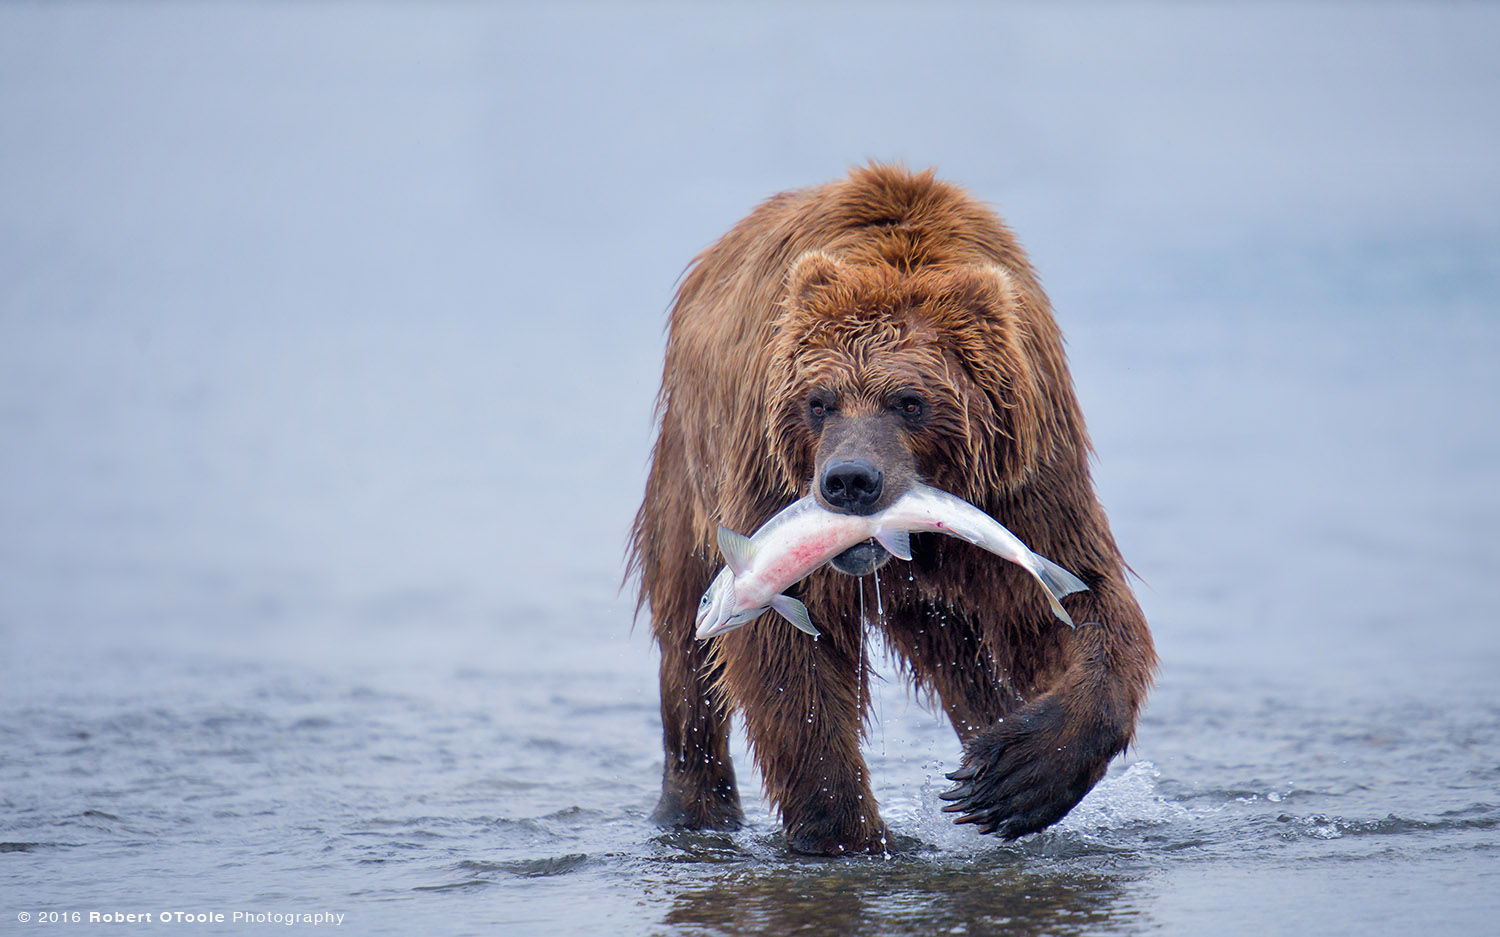 Hallo-bear-with-fish-2014-Robert-OToole-Photography